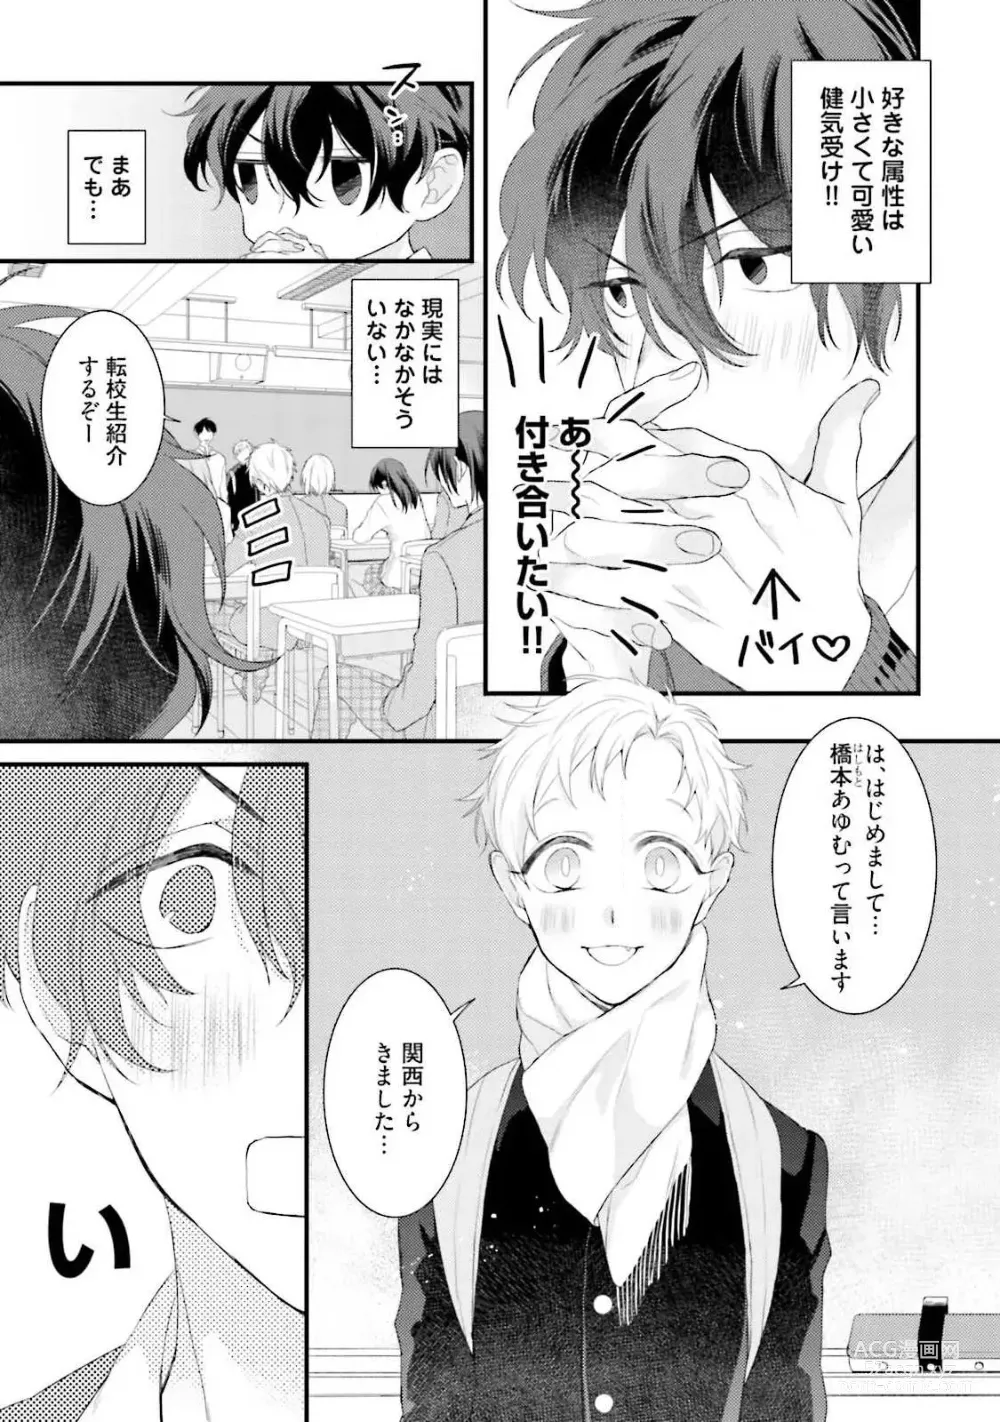 Page 7 of manga Ore Seme x Kimi Uke ~Risou no Oshi Zokusei~